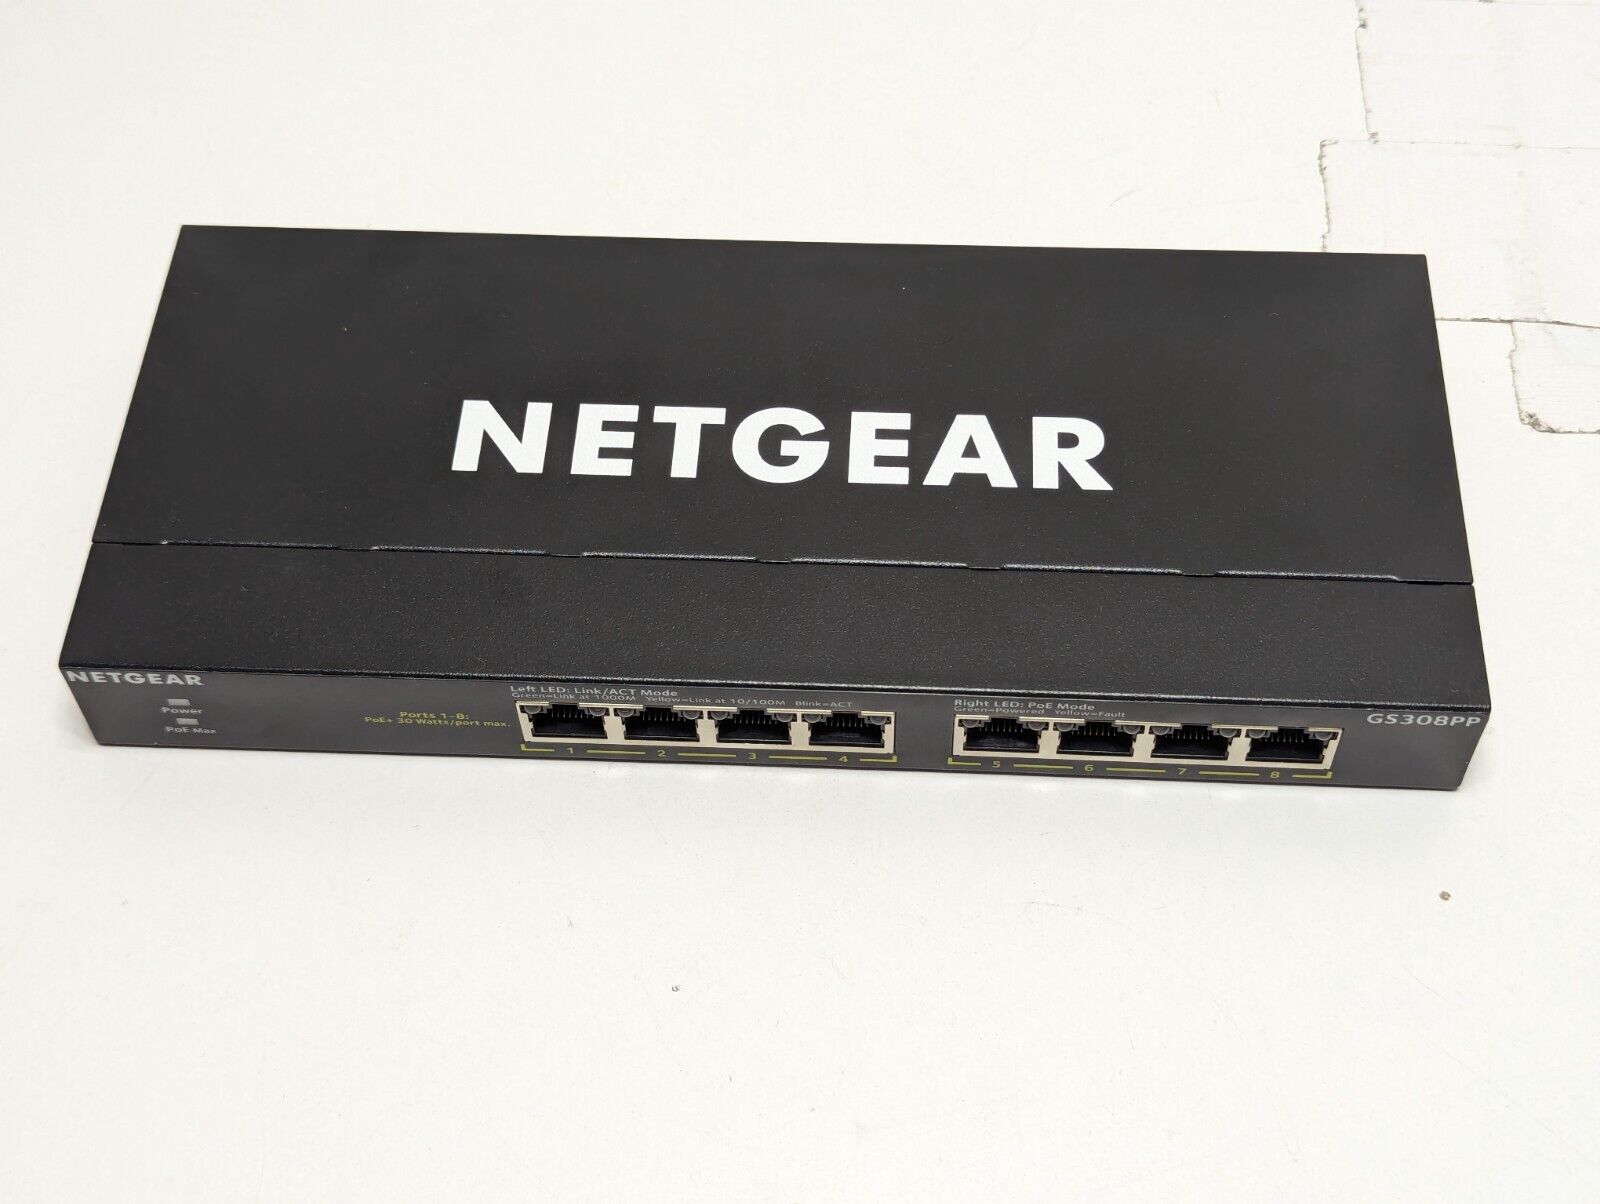 NETGEAR 8-Port Gigabit Ethernet Unmanaged PoE+ Switch (GS308PP) - No Power